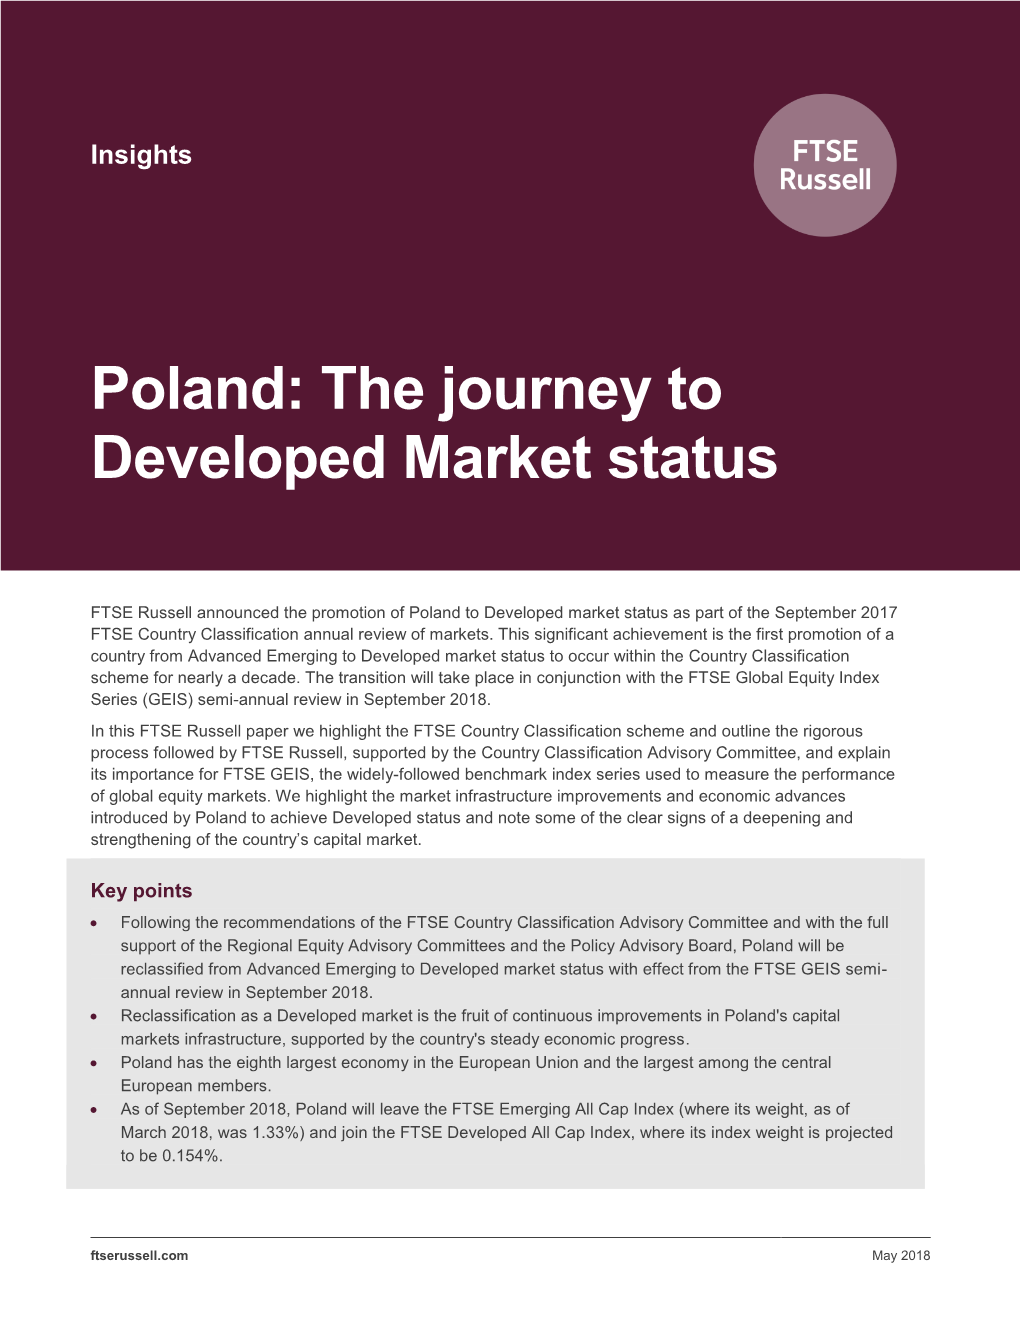 Poland: the Journey to Developed Market Status